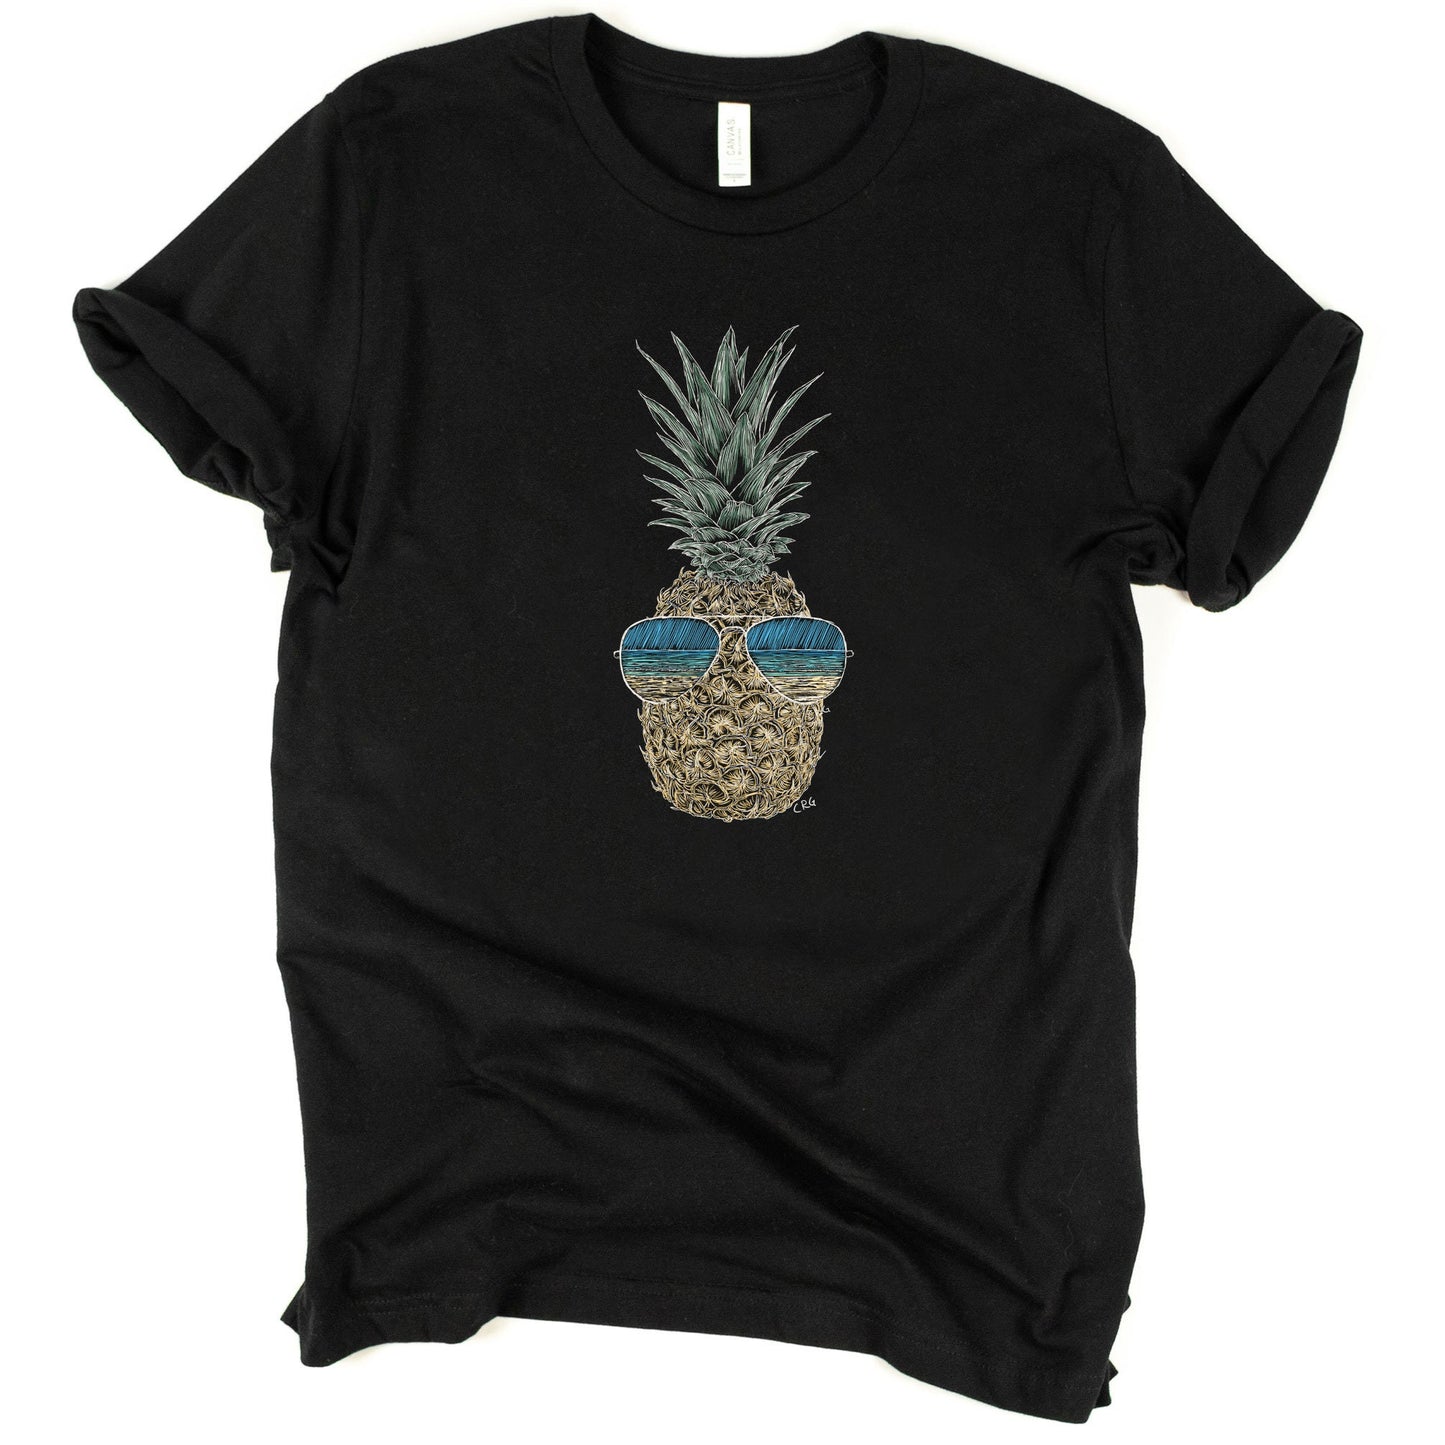 Pineapple with Sunglasses Shirt